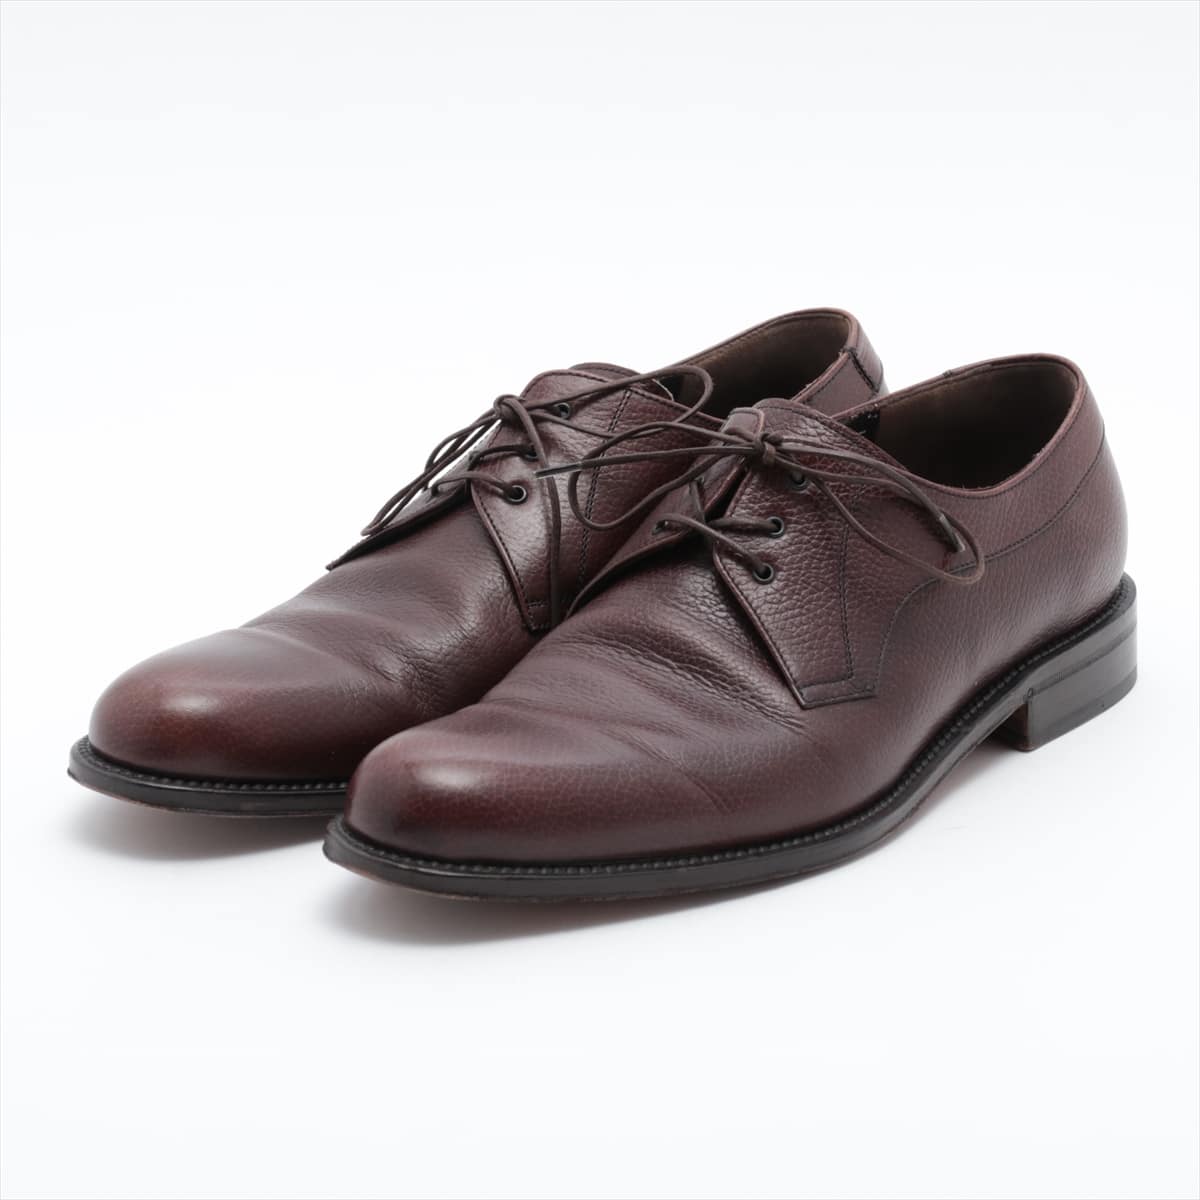 Ferragamo Leather Dress shoes 7 EE Men's Brown